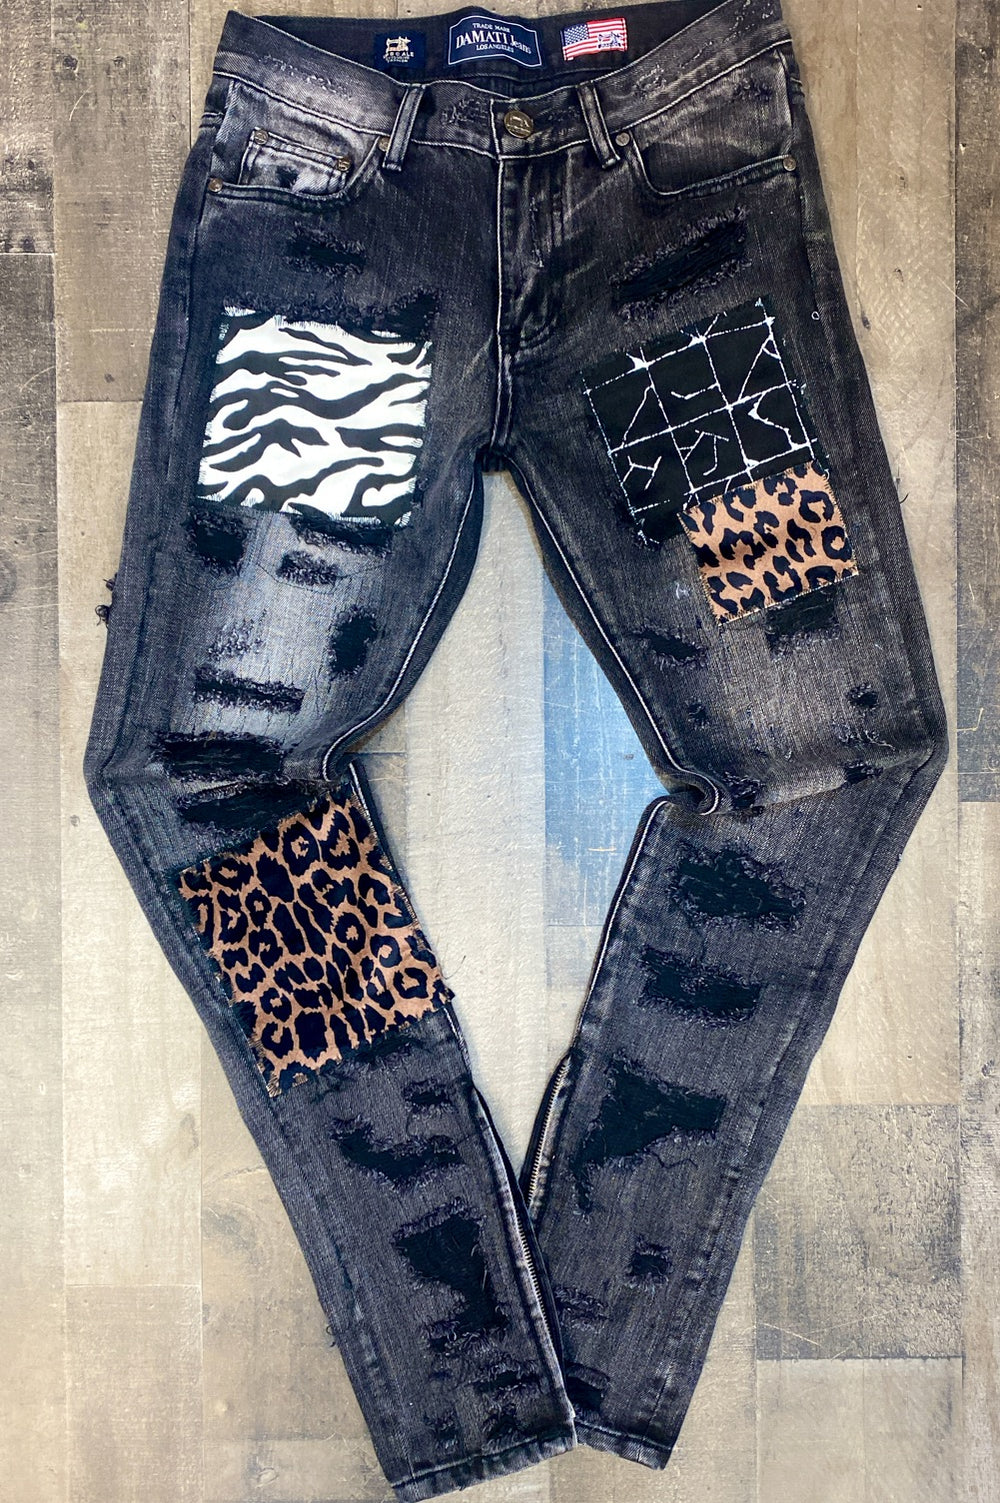 DAMATI- animal print jeans